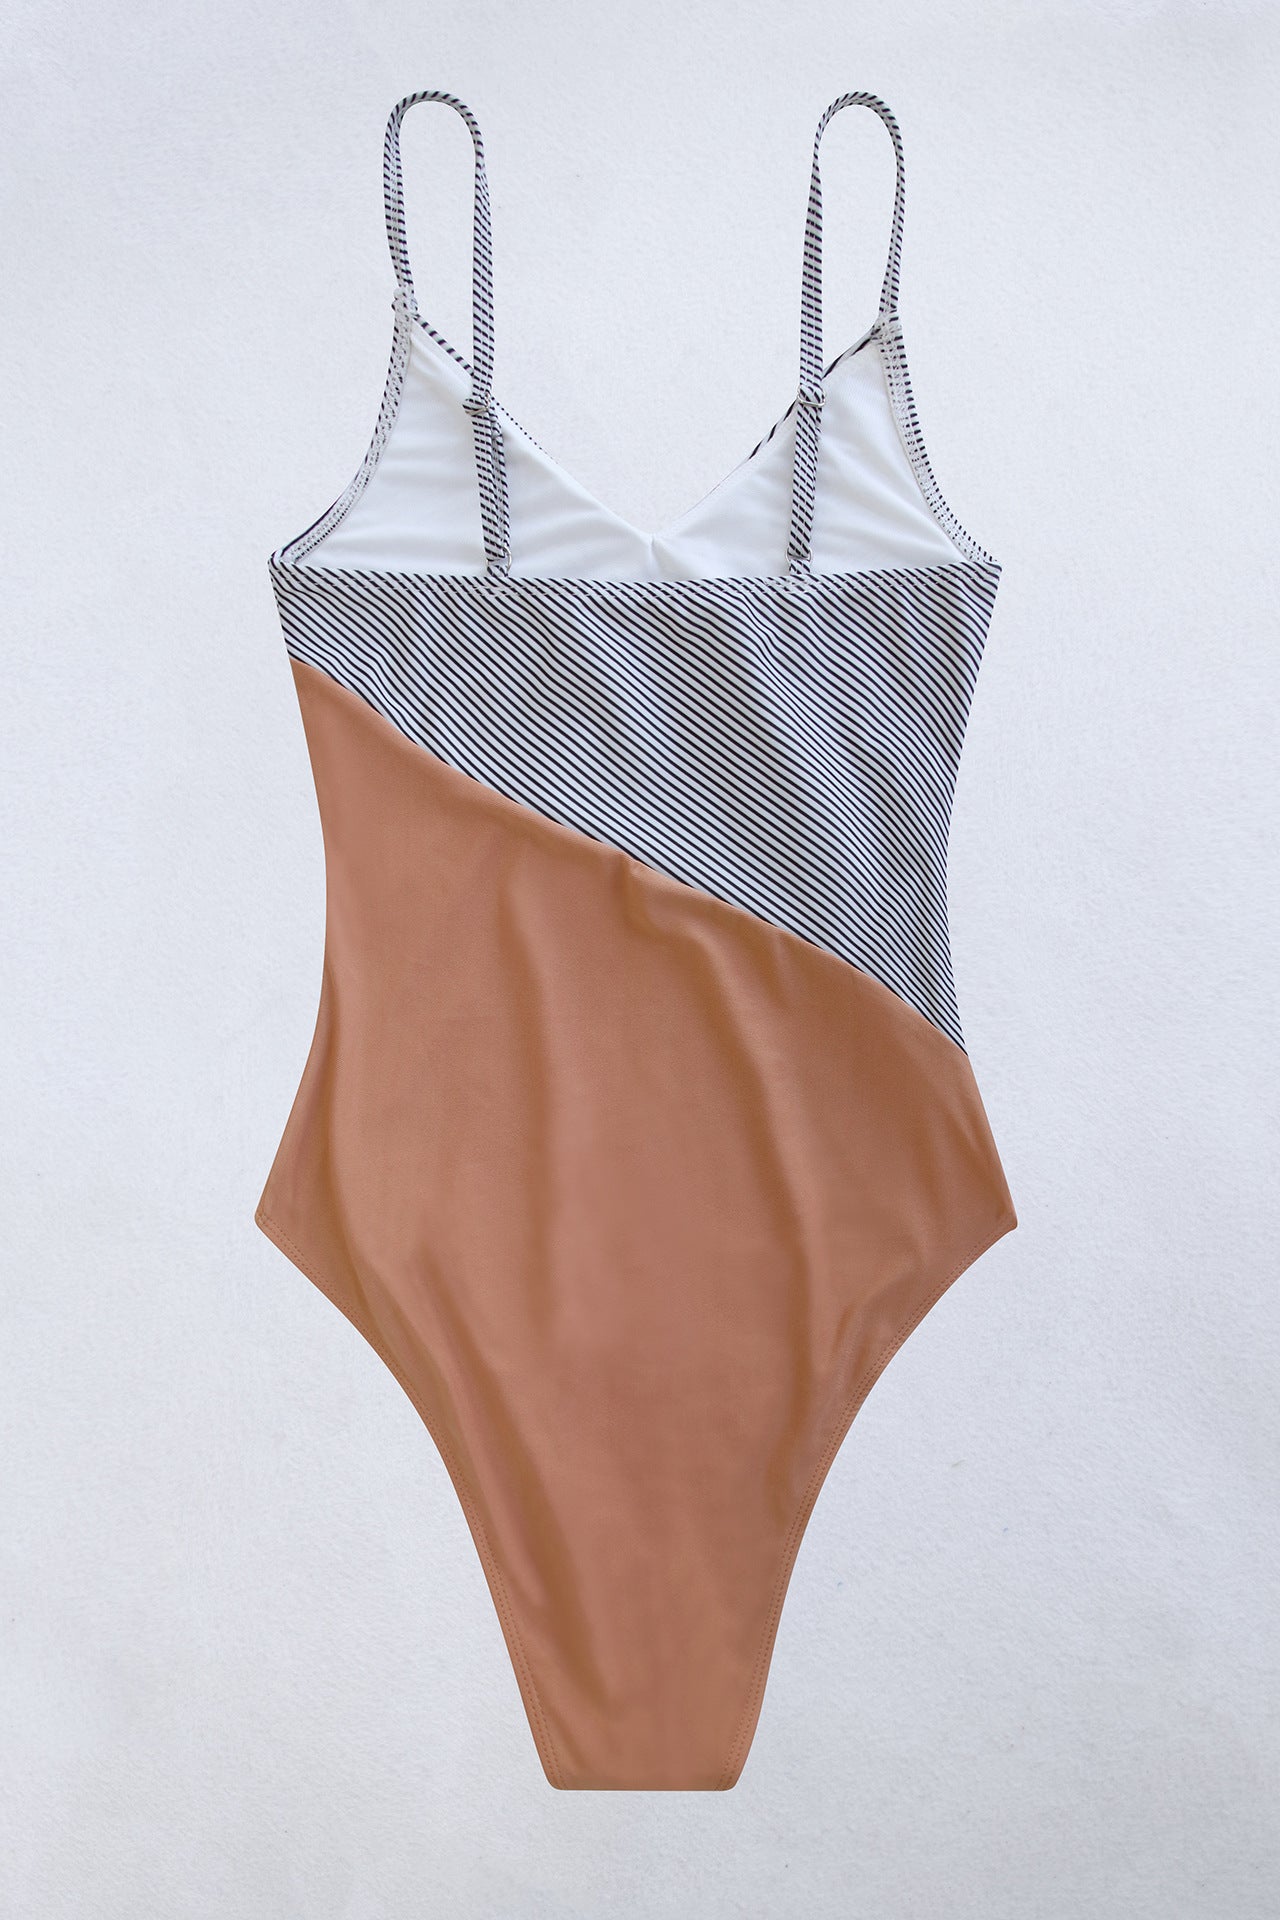 Women's one-piece spaghetti strap swimsuit